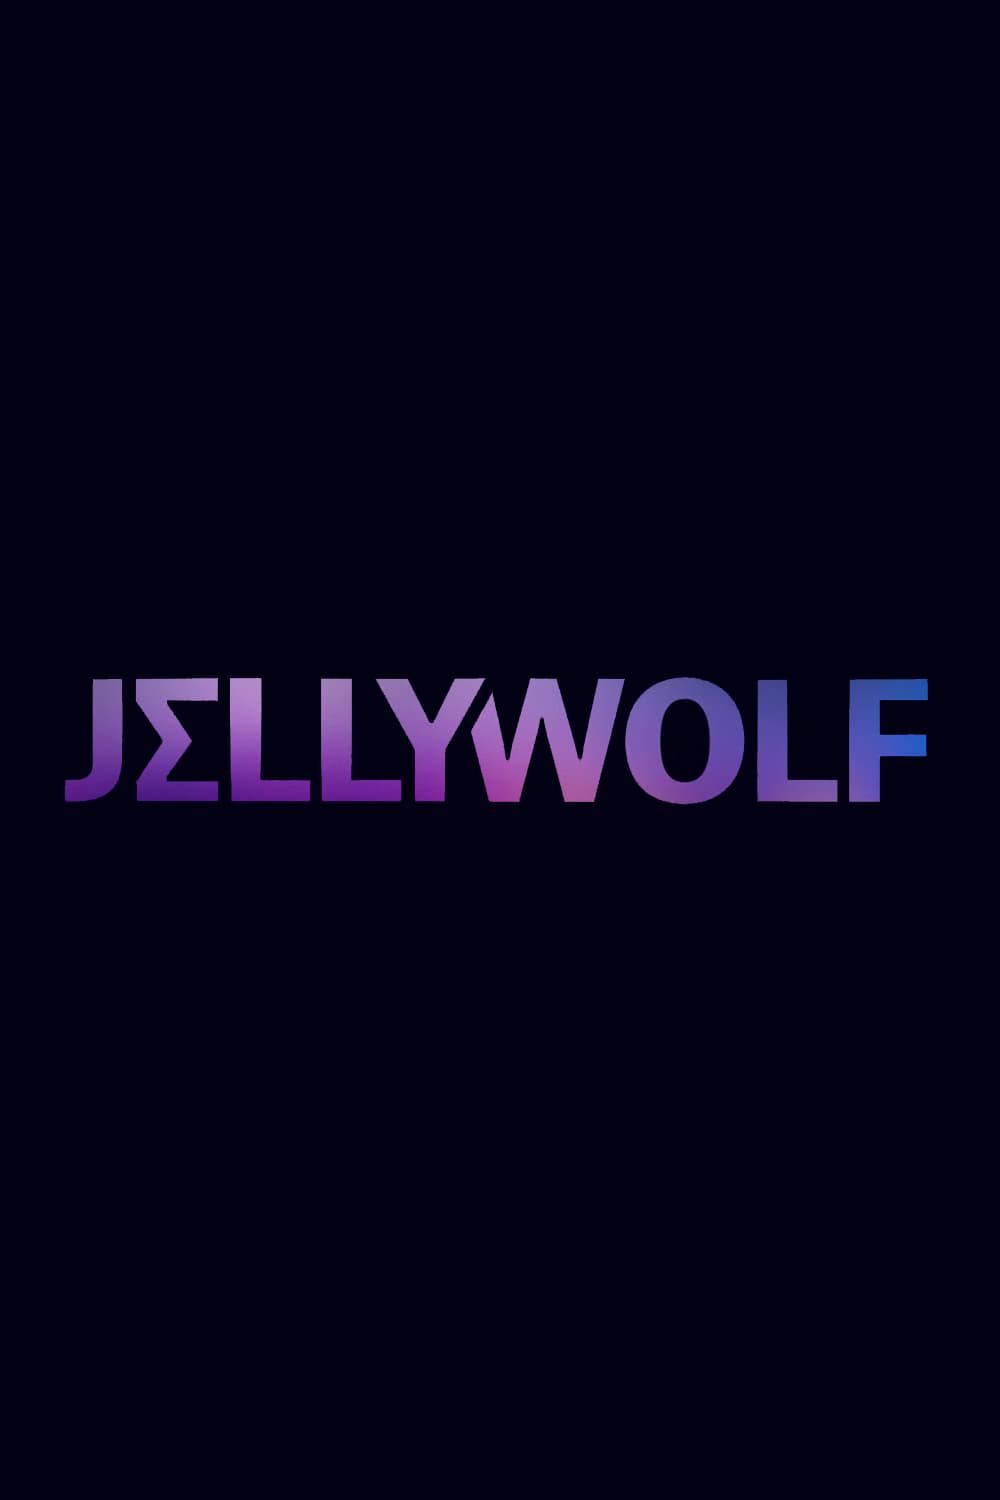 Jellywolf poster